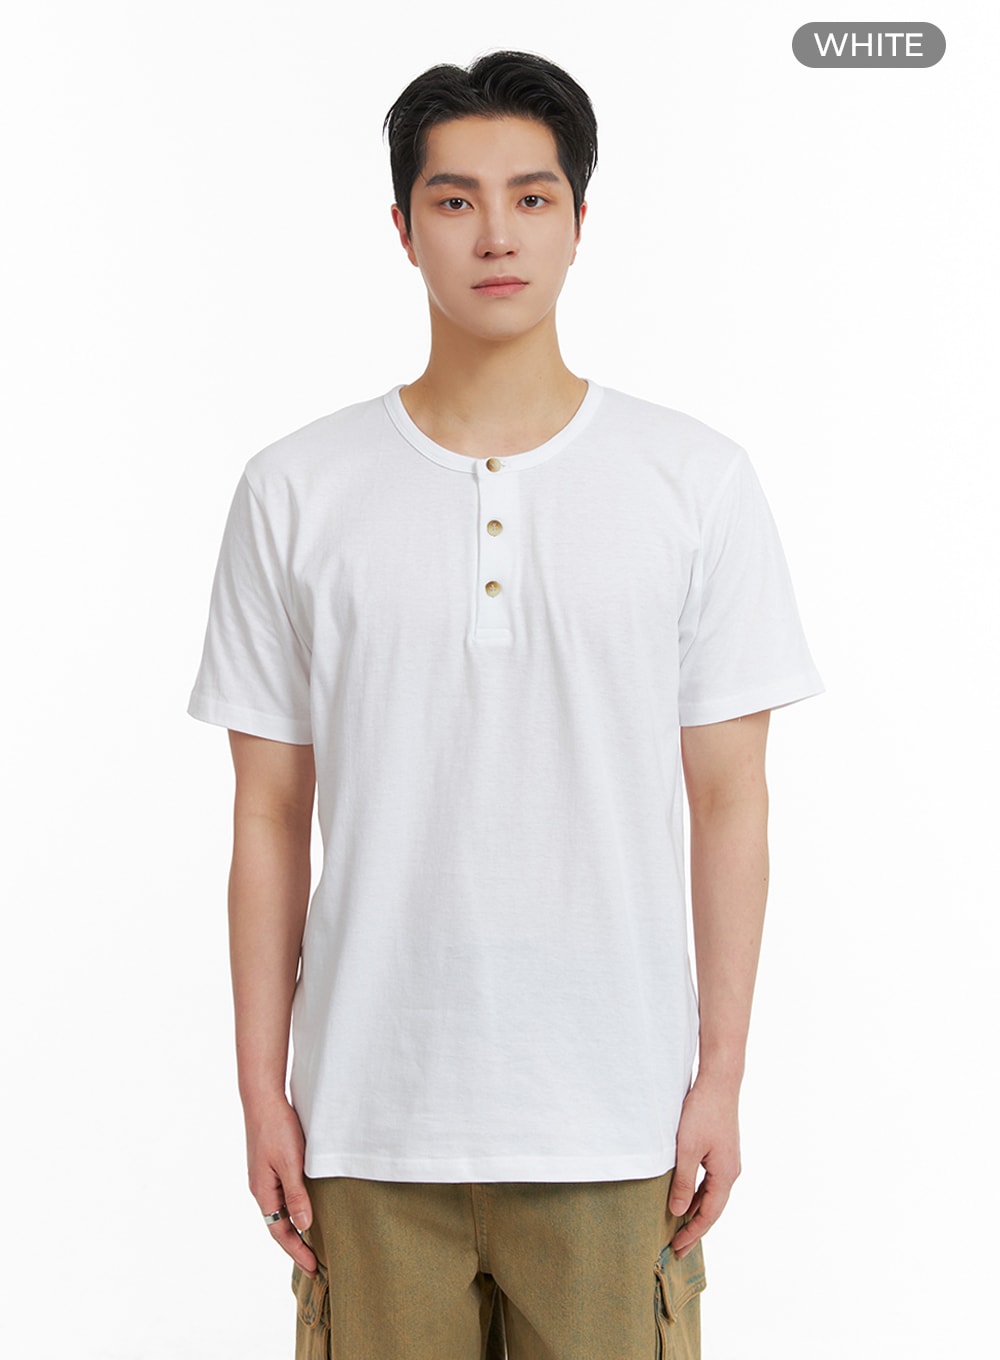 mens-quarter-button-up-cotton-t-shirt-ia401